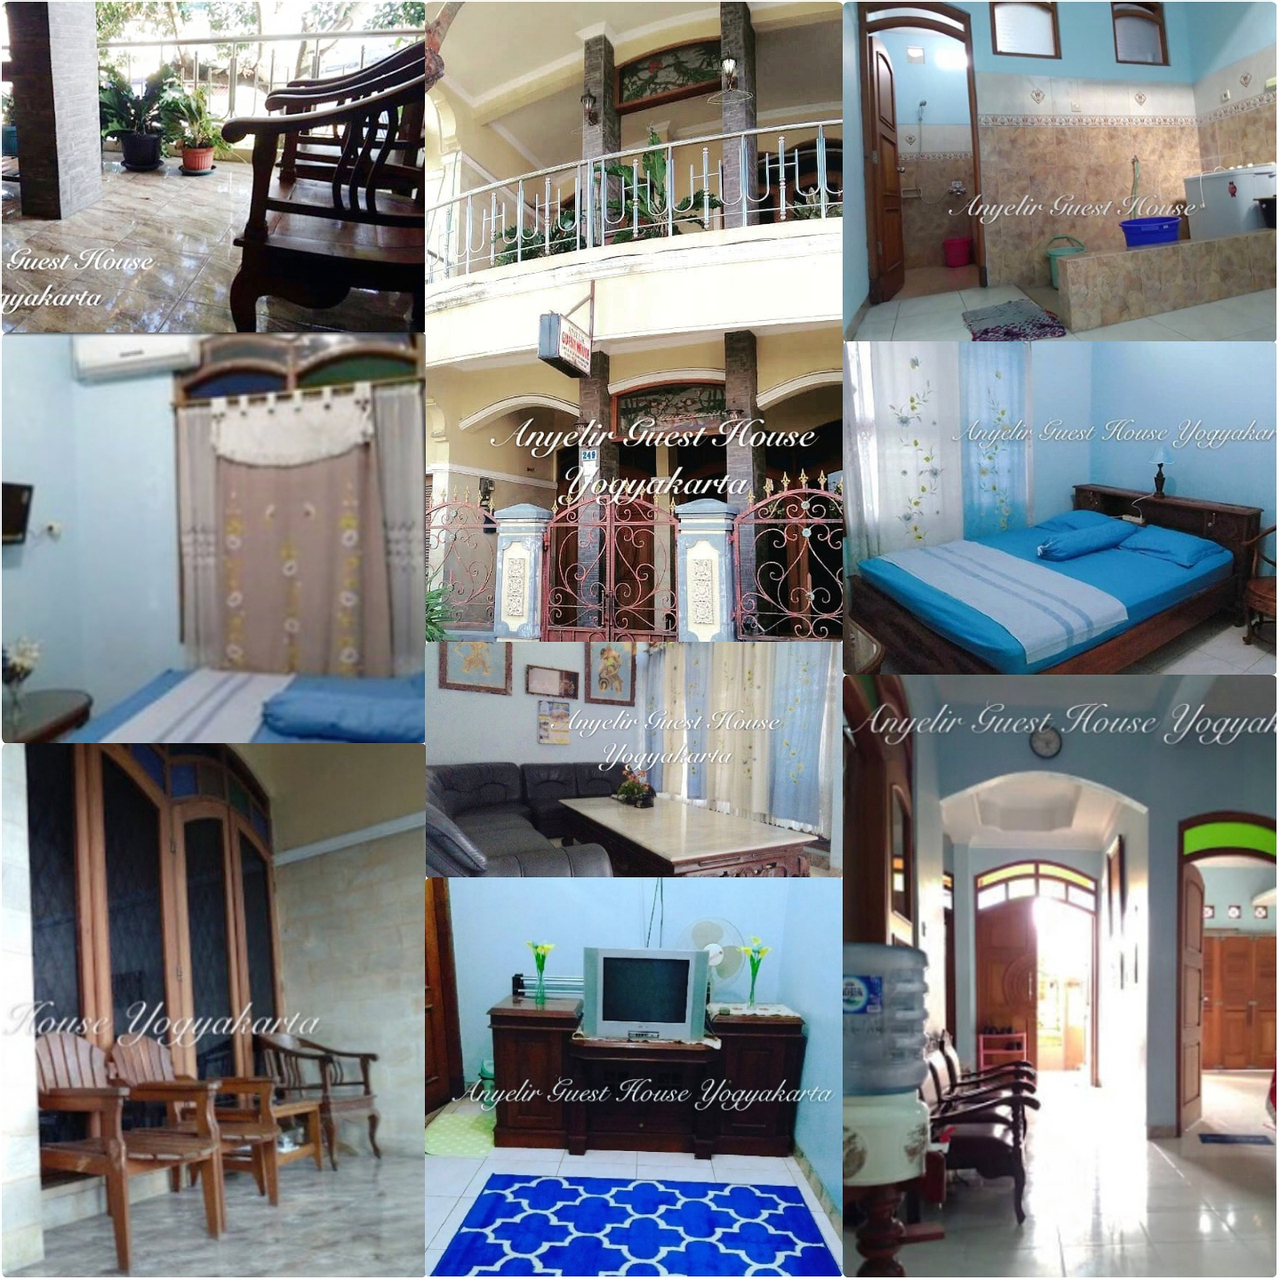 Bedroom 1, Anyelir Guest House Yogyakarta, Yogyakarta